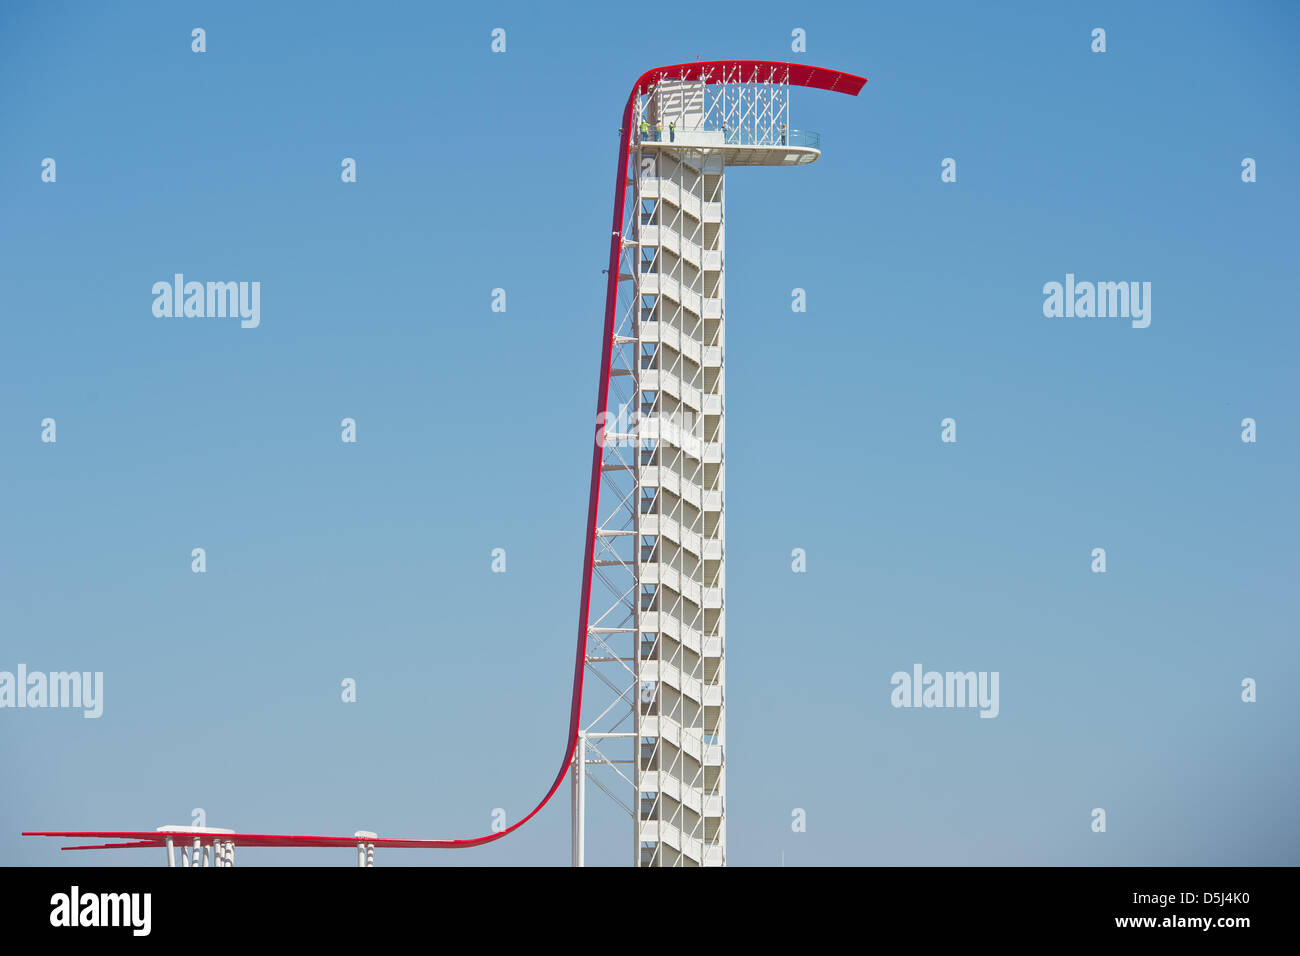 Das Turm-Amphitheater auf dem Circuit of The Americas in Austin, Texas, USA, 14. November 2012. Die Formel 1 United States Grand Prix statt findet am 18. November 2012. Foto: David Ebener Dpa +++(c) Dpa - Bildfunk +++ Stockfoto